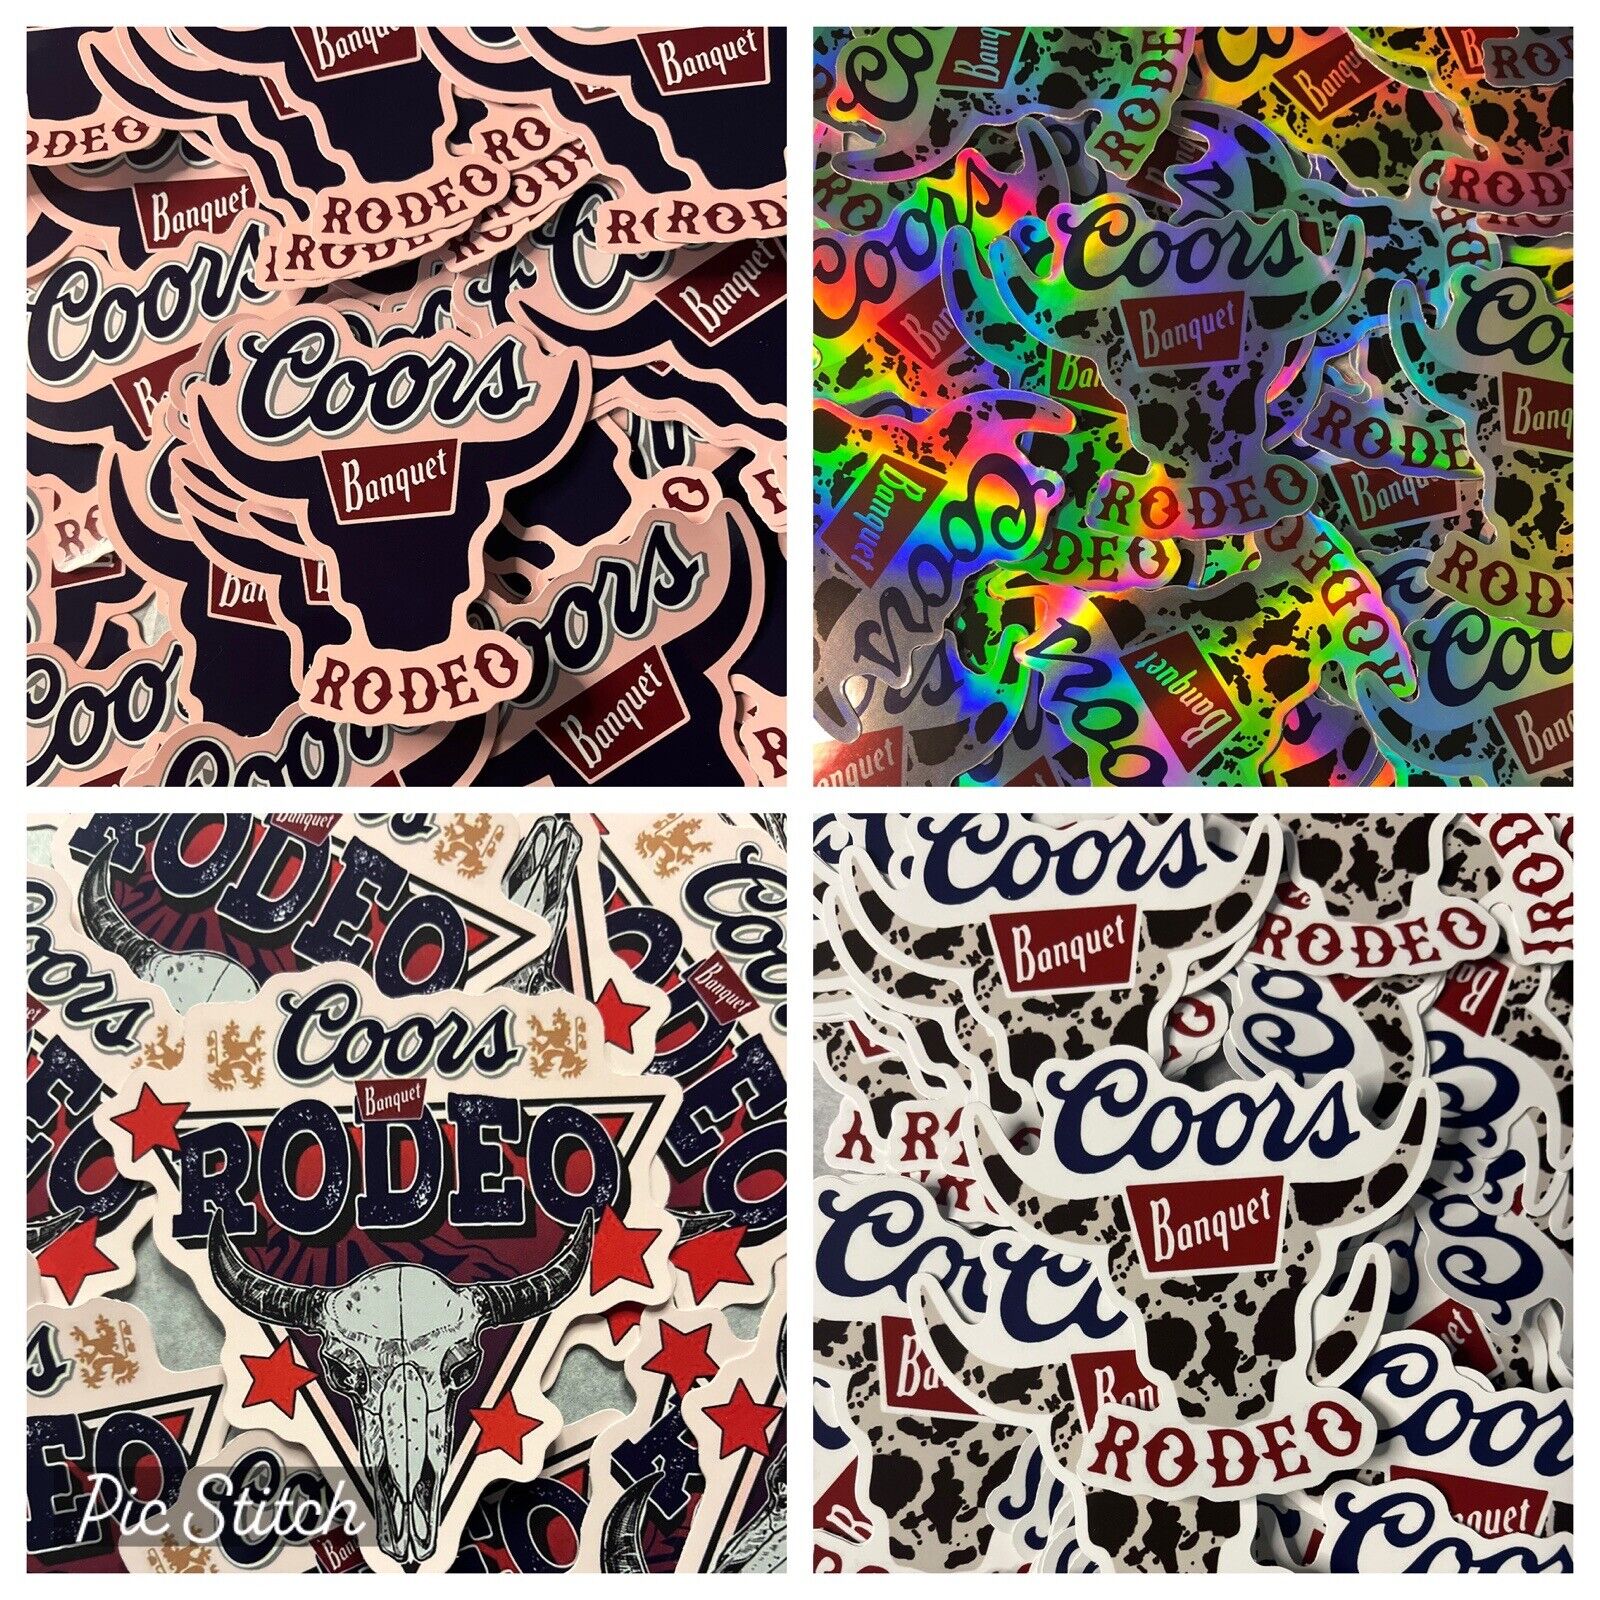 coors banquet Rodeo Cow print Sticker Pack (4 PCs)